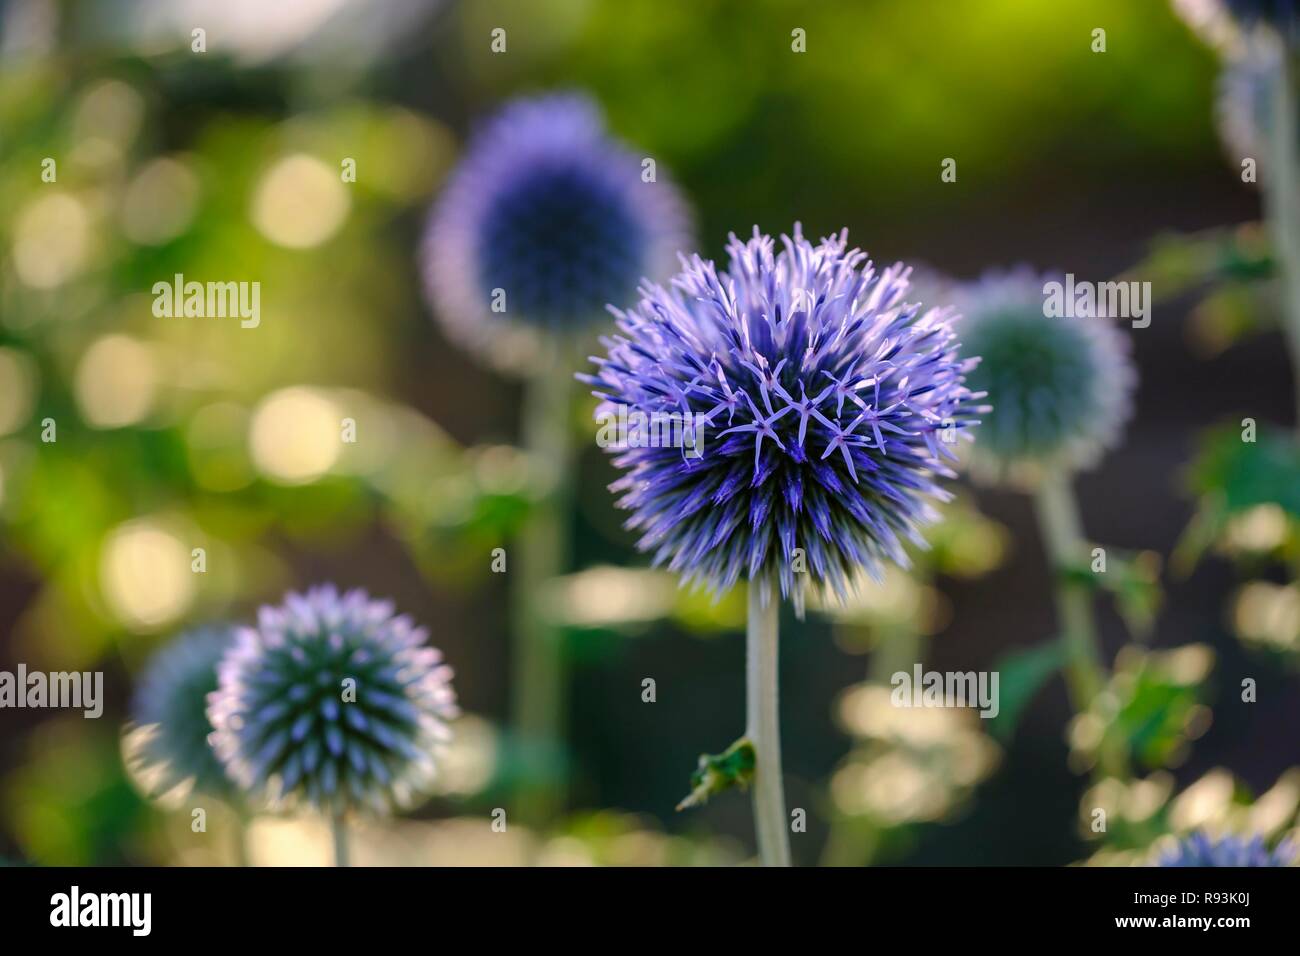 Blue flower of the globe thistle (Echinops ritro), garden plant, Germany Stock Photo